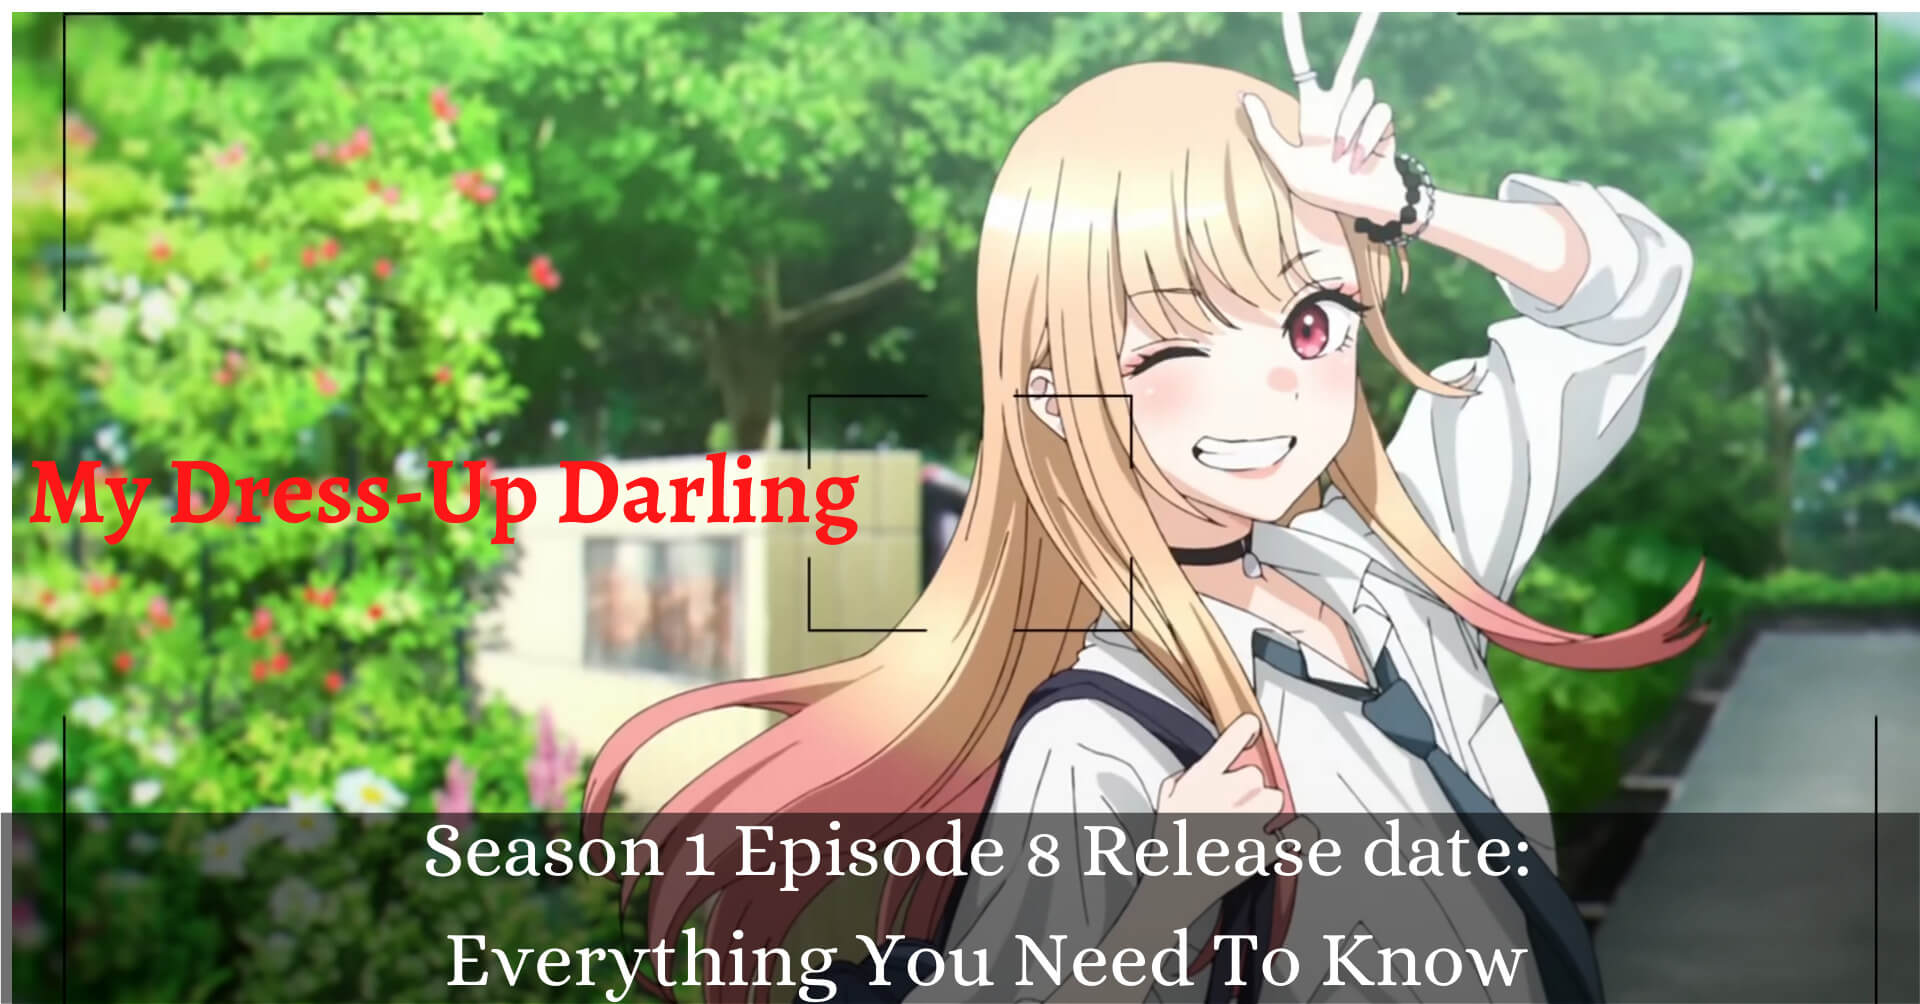 My Dress-Up Darling Season 1 Episode 8 Release date